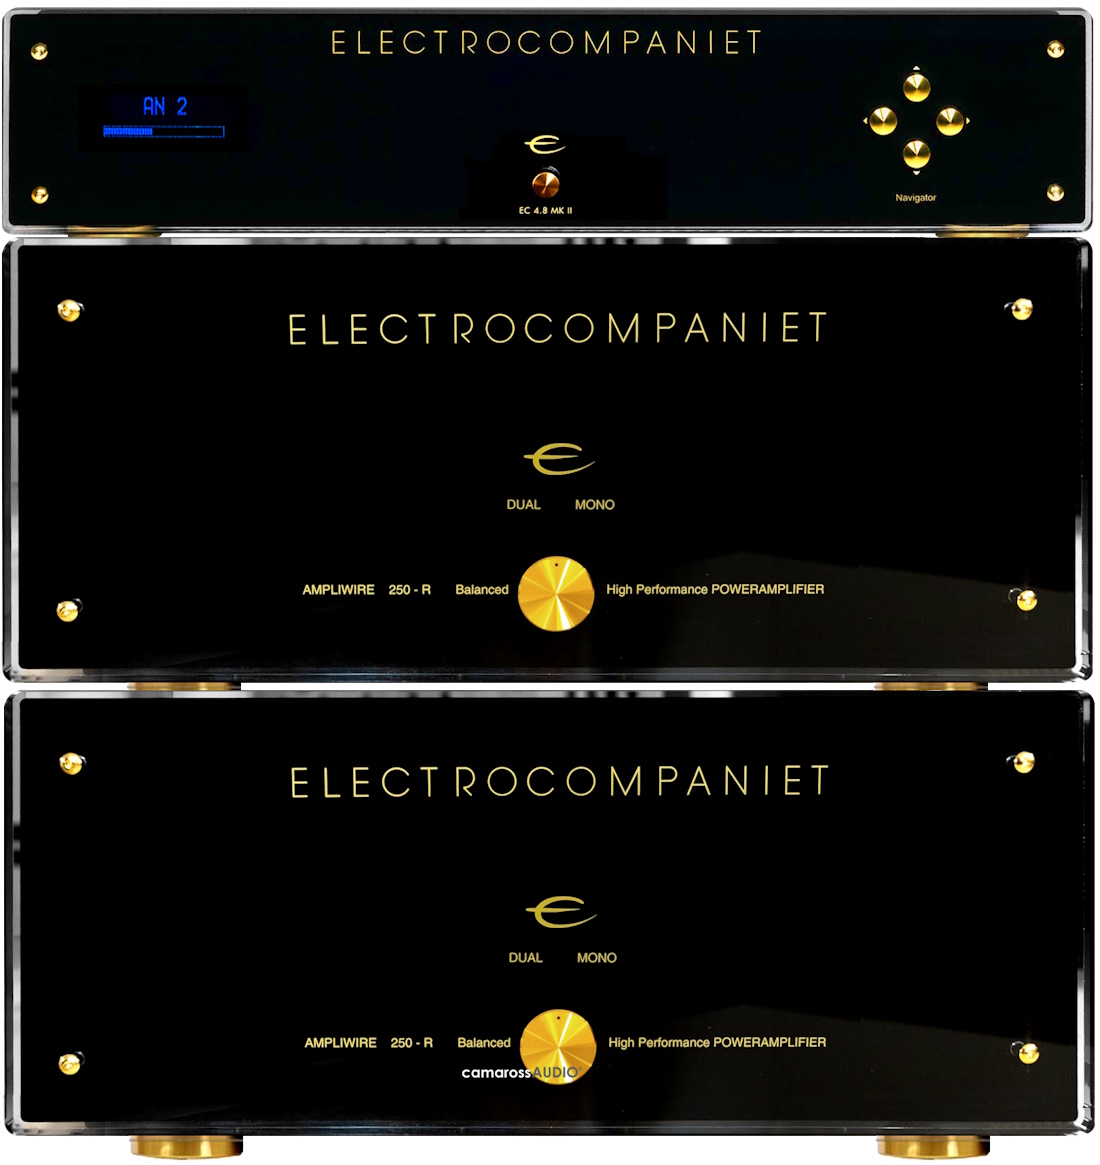 electrocomponiet-pre-power-amp.jpg